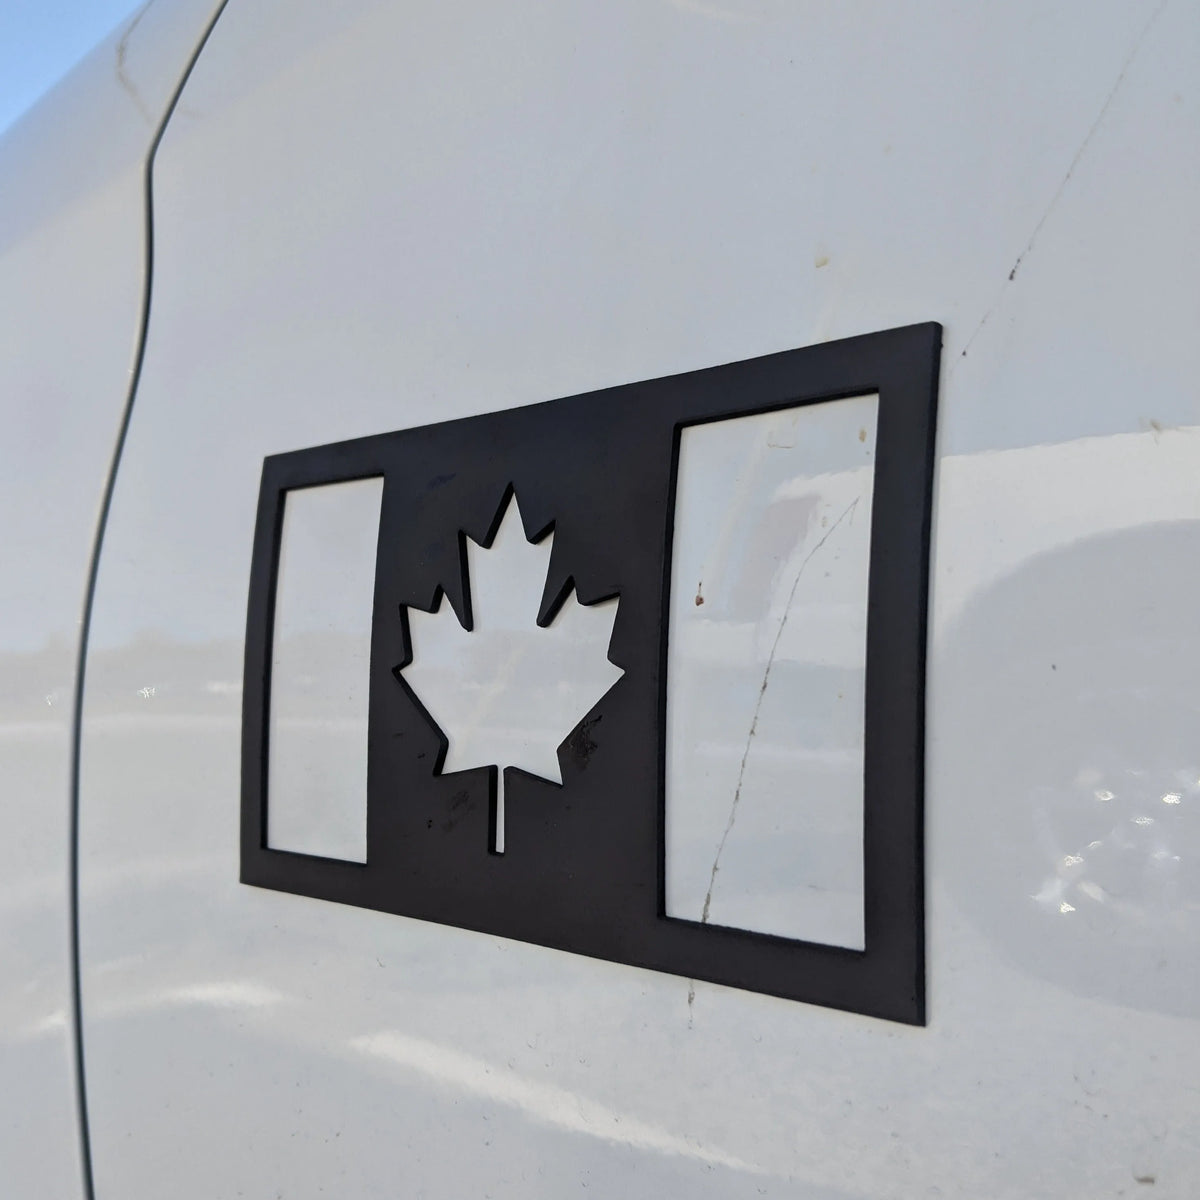 CAR/TRUCK FLAG MAGNET - CANADIAN FLAG - IKONIC BADGES - 3.75" x 6.5"